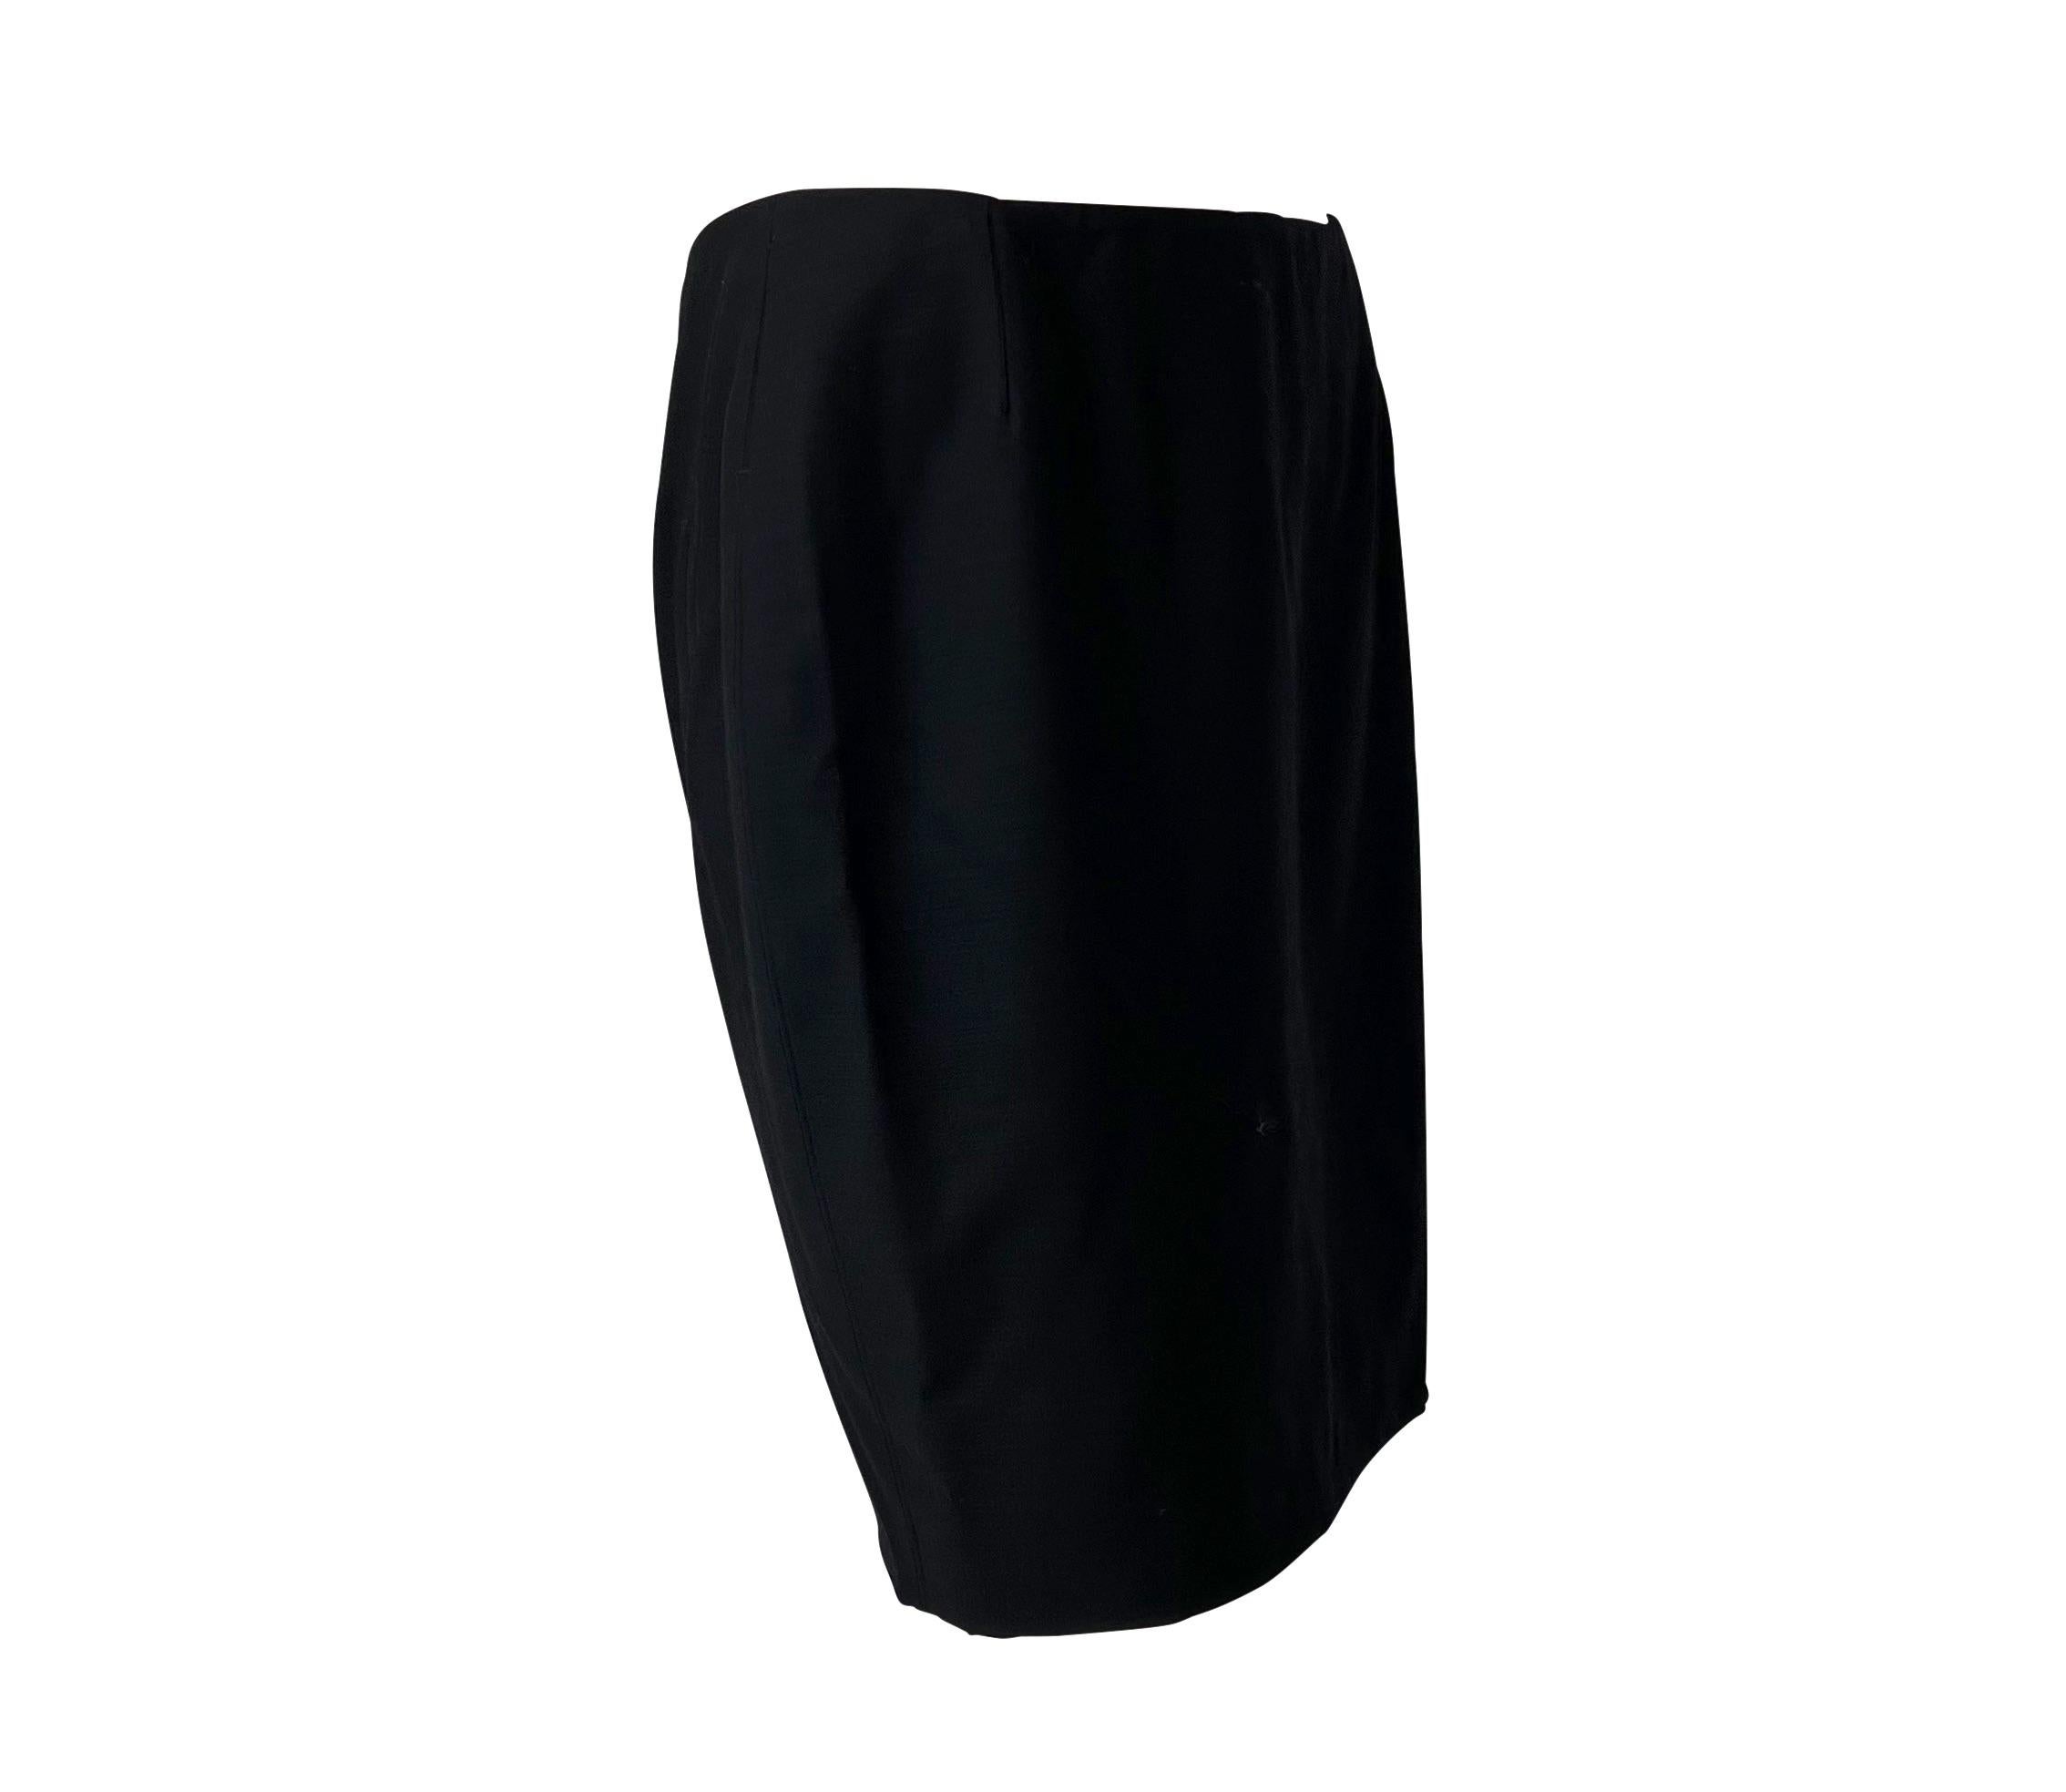 S/S 1998 Gianni Versace by Donatella Japanese Satin Appliqué Black Skirt For Sale 3